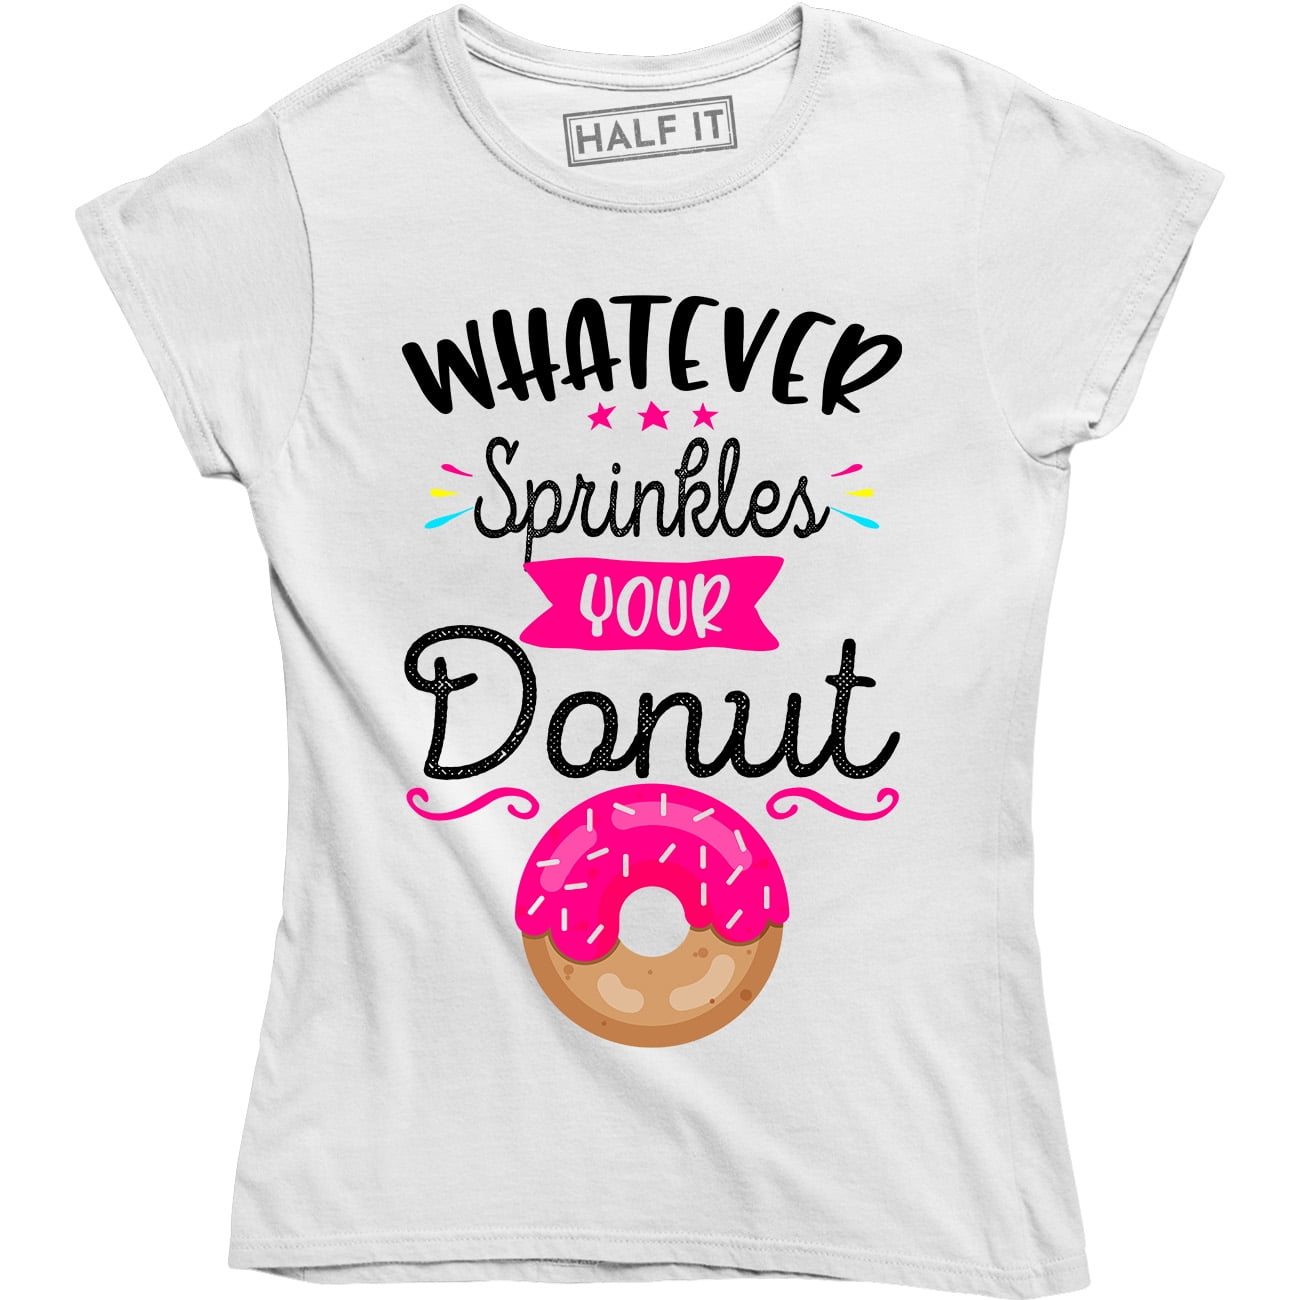 Donut Mom Shirt Funny Mom Gift Shirts For Women' Women's Premium T